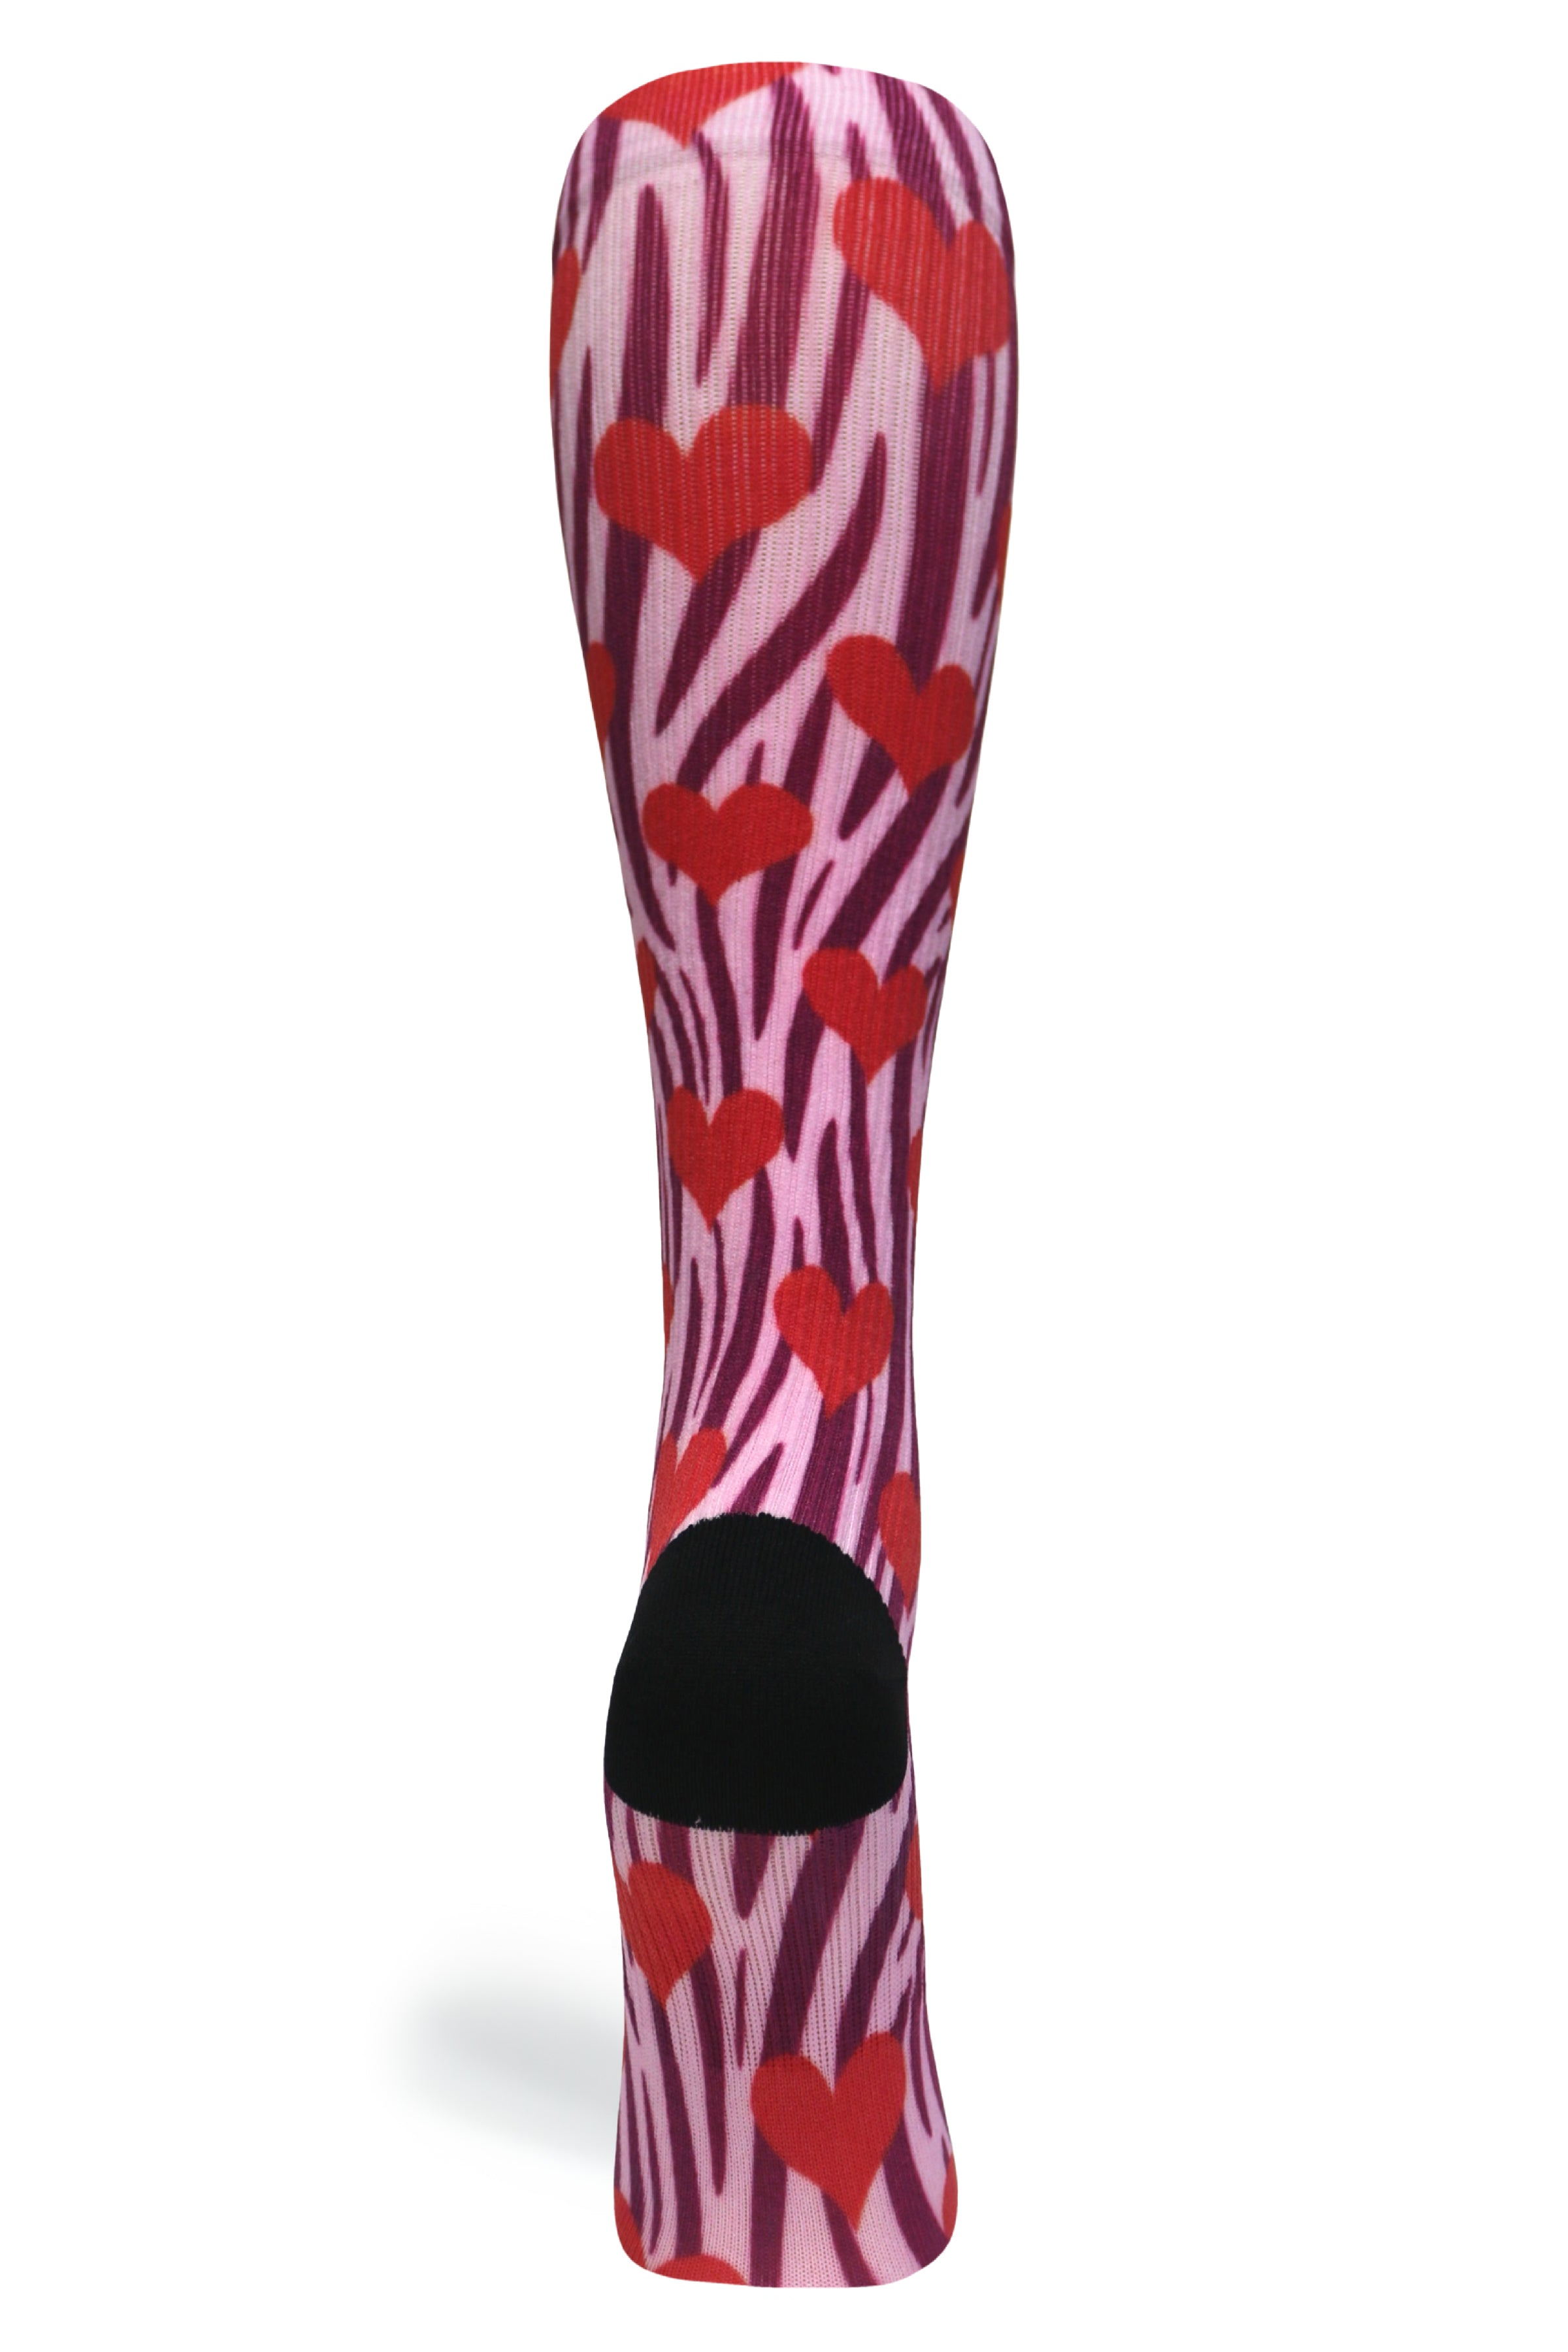 360 Zebra Hearts OTC Compression Socks (Standard & Extra Wide)